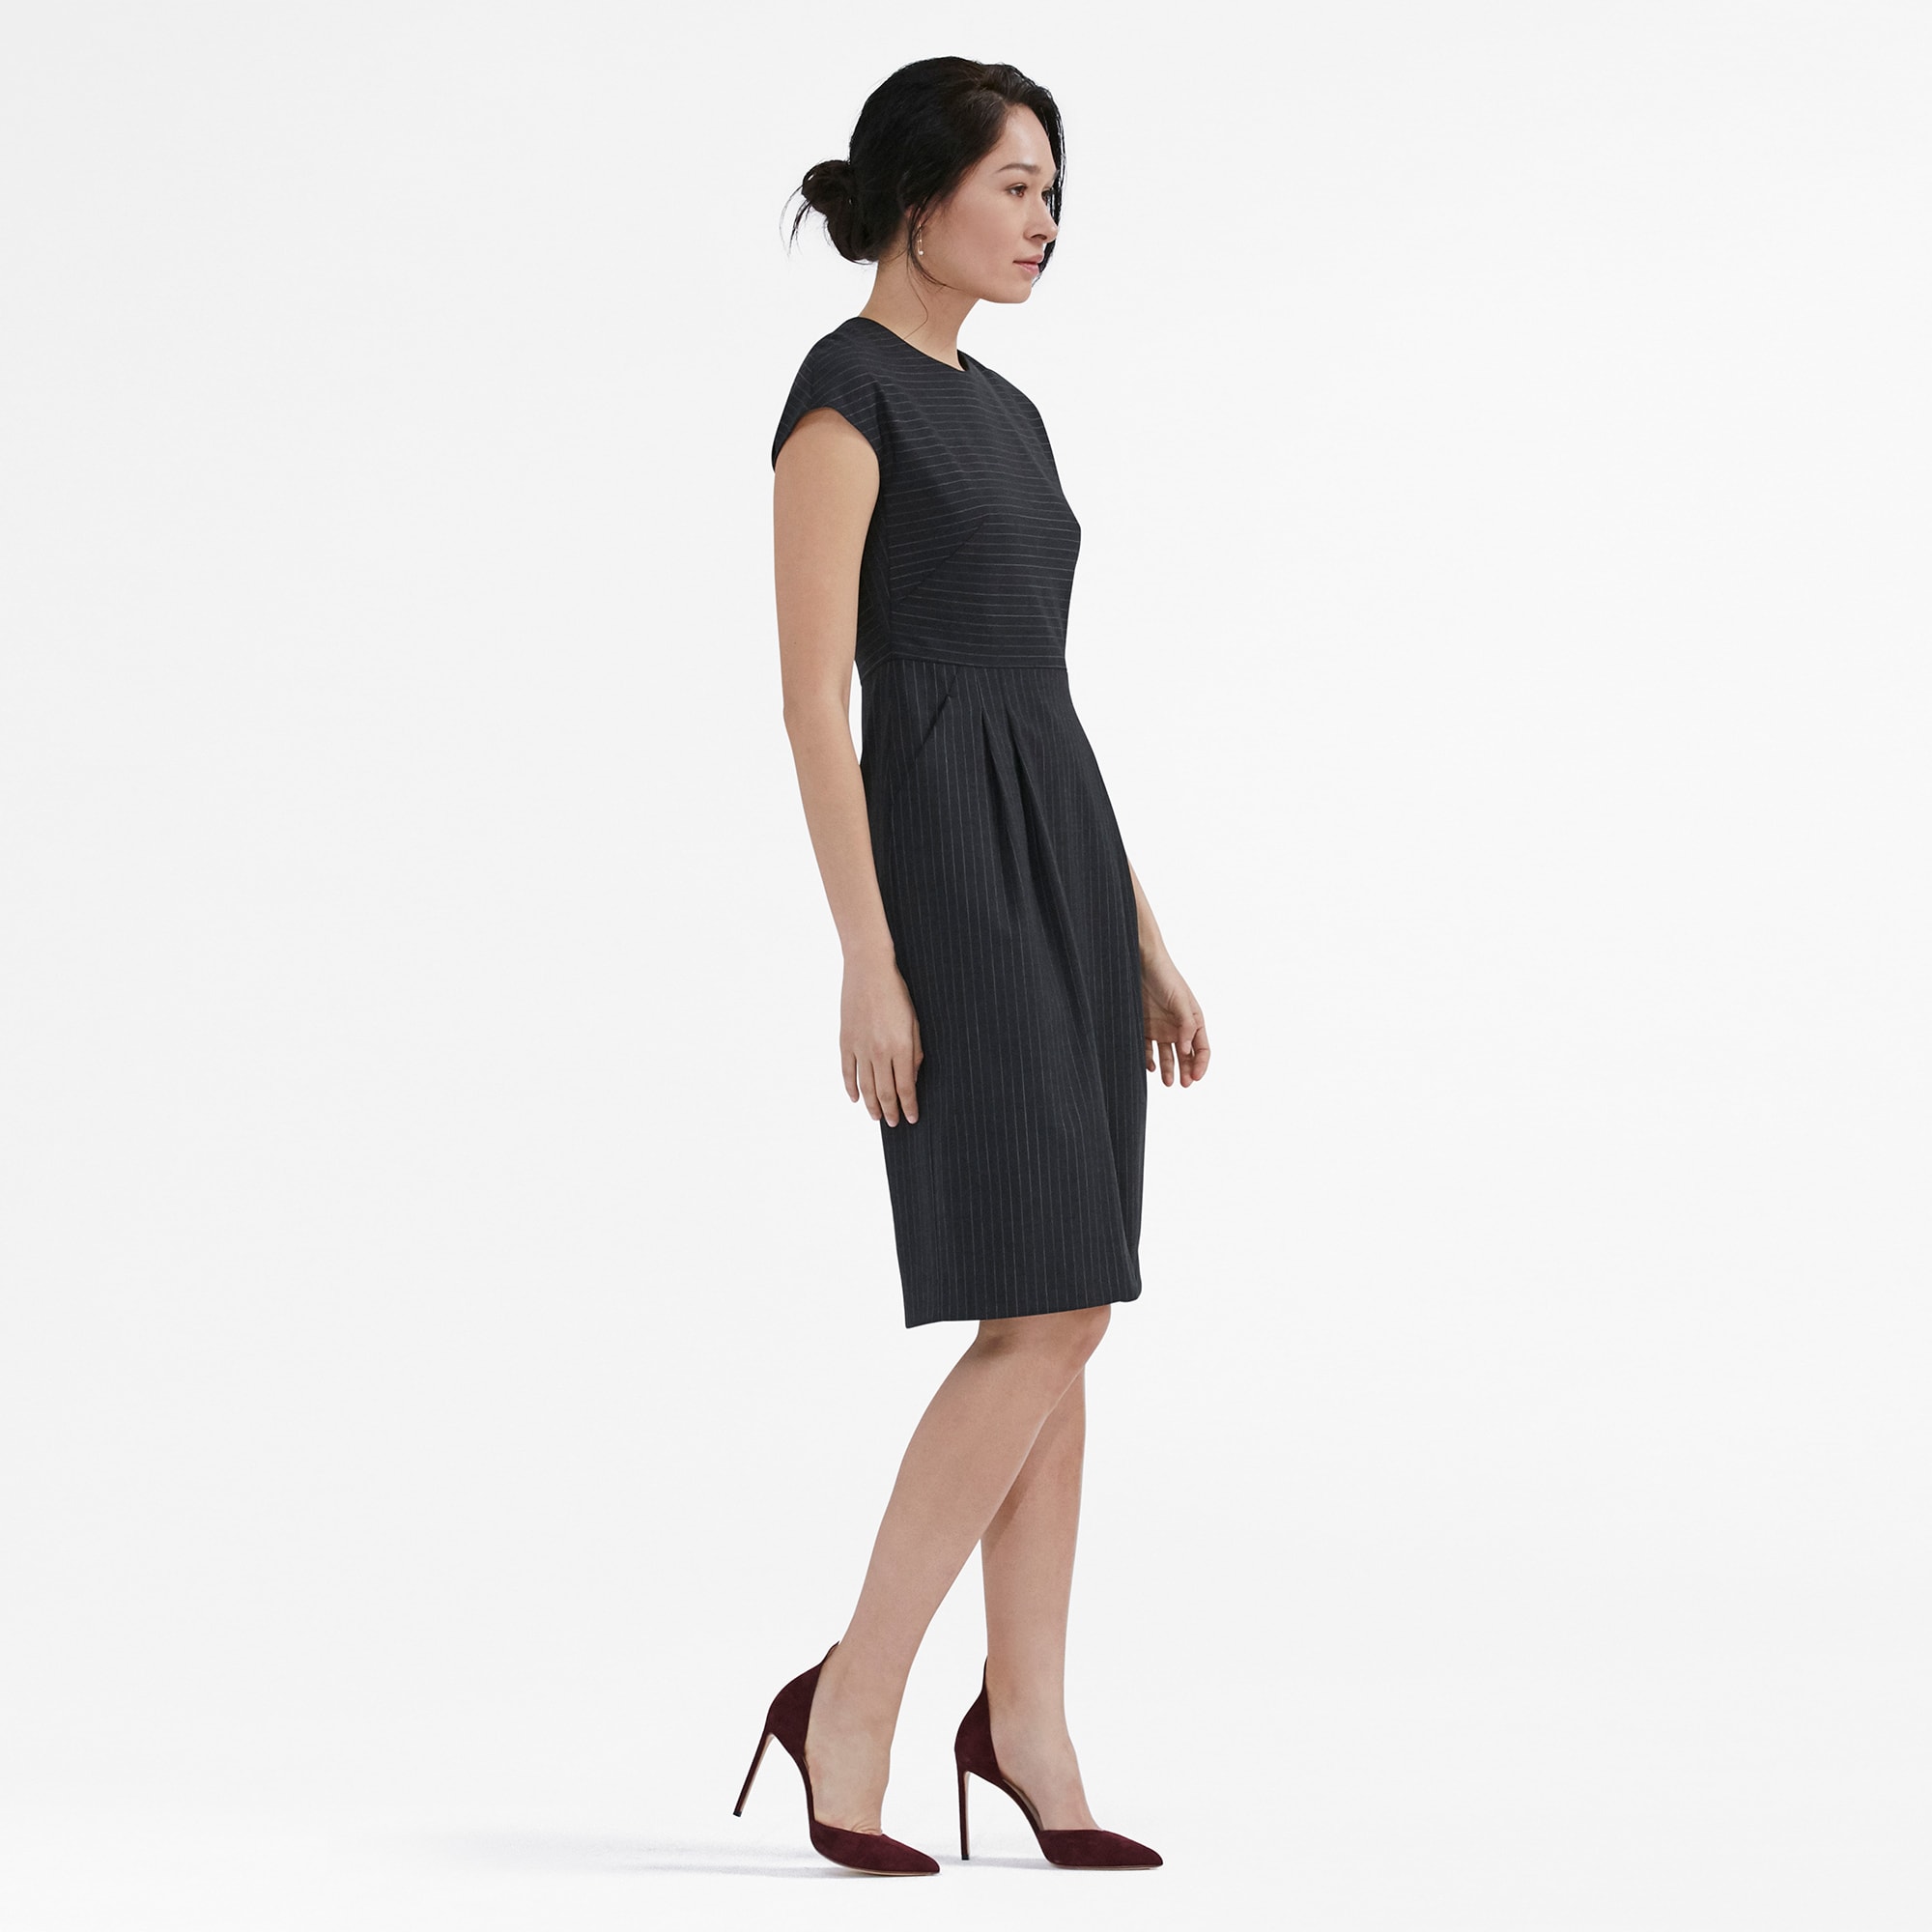 The Masha 2.0 Dress—Pinstripe - Charcoal / White | M.M.LaFleur